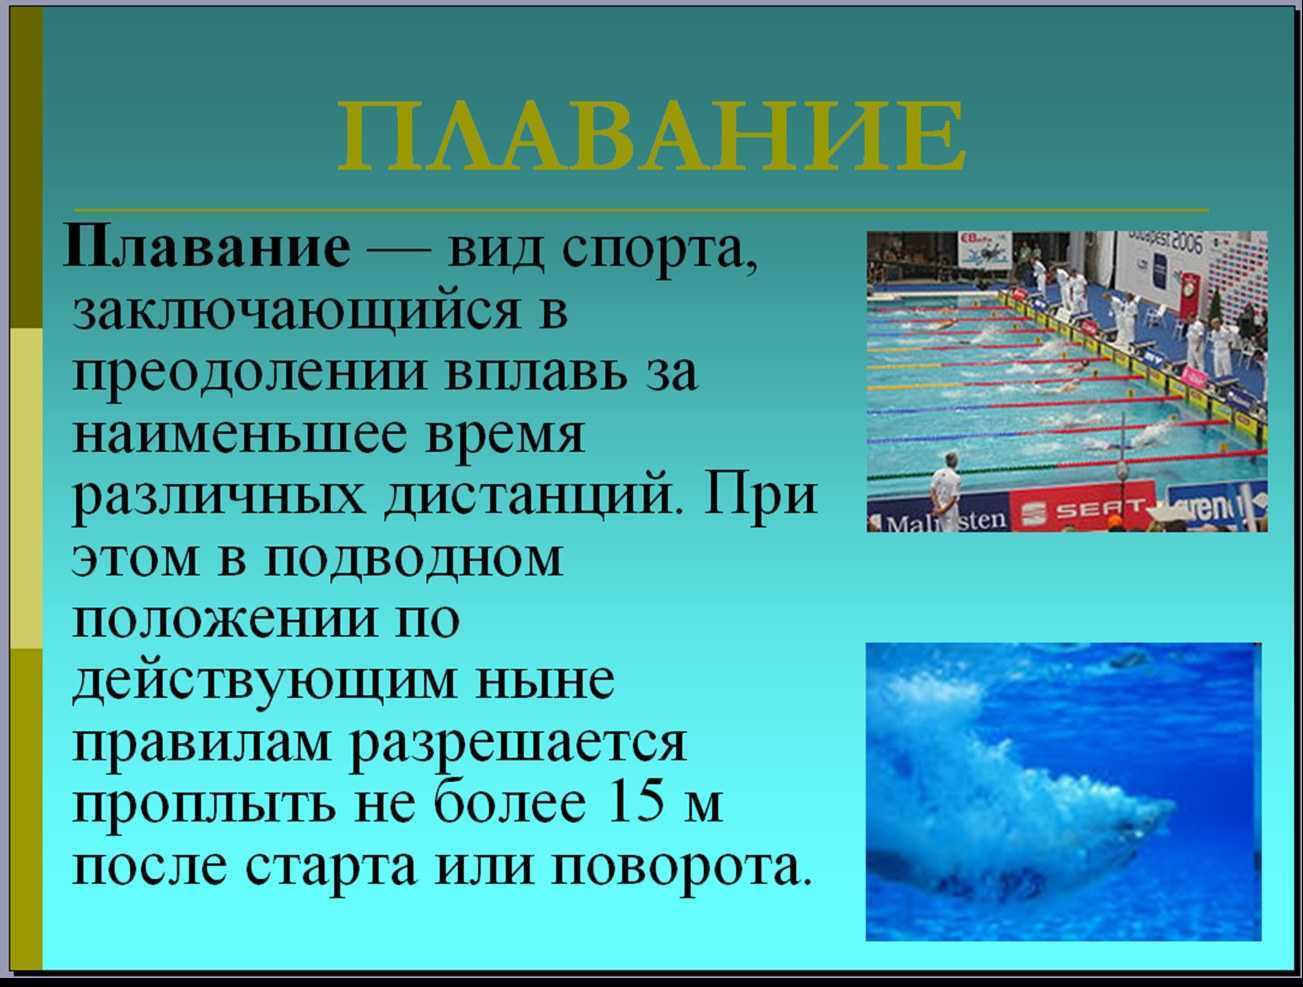 Виды купания. Плавание презентация. Презентация на тему плавание. Виды спортивного плавань. Плавание доклад.